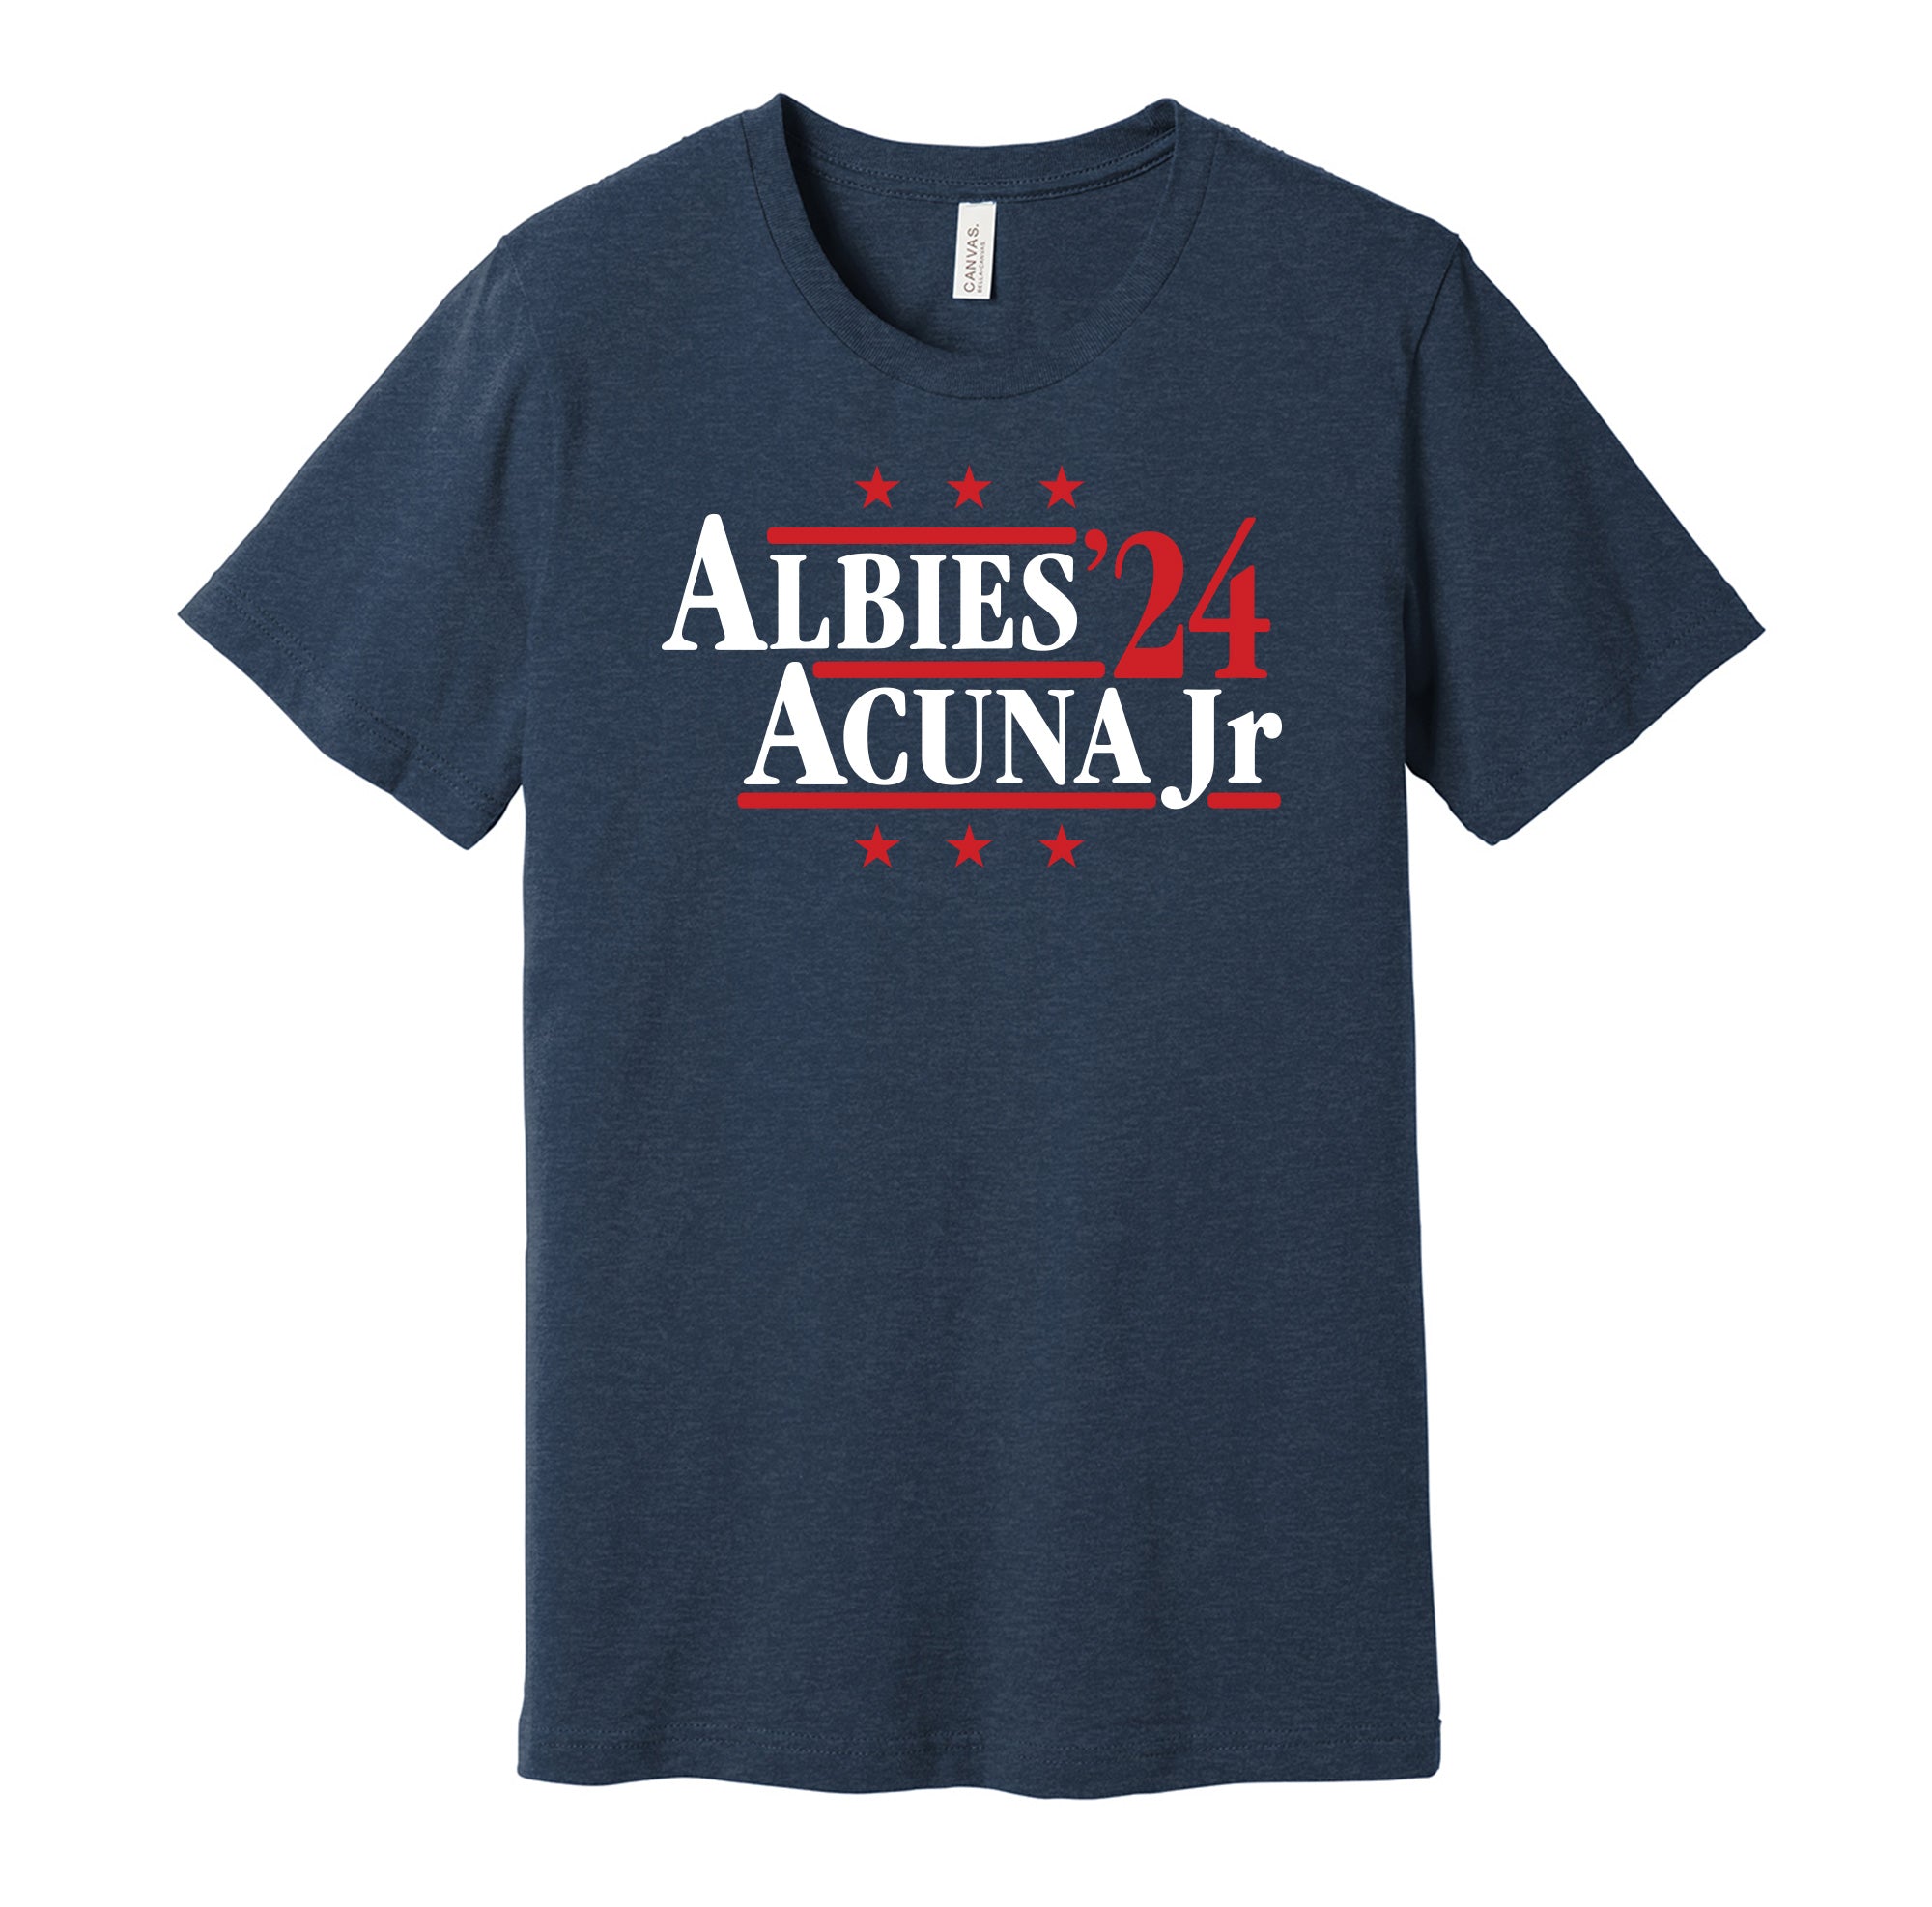 Albies & Acuna Jr '24 - Atlanta Baseball Political Campaign Parody T-Shirt - Hyper Than Hype Shirts M / Navy Shirt